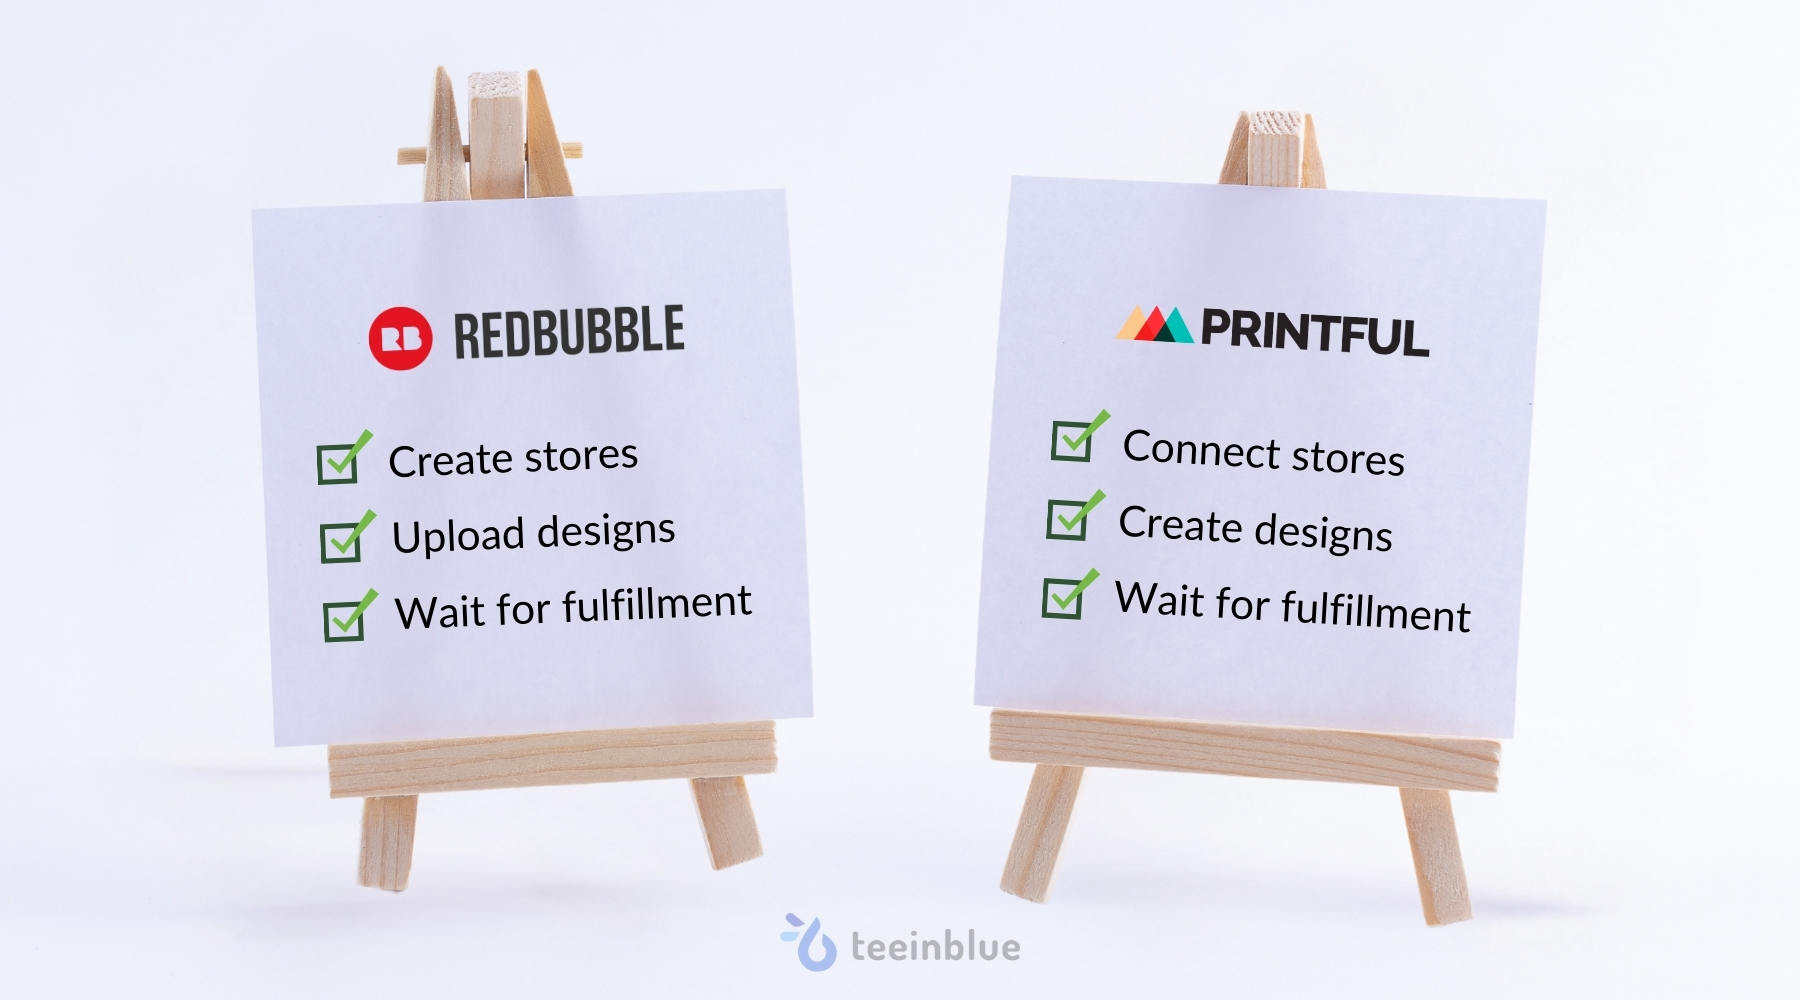 redbubble vs printful differences